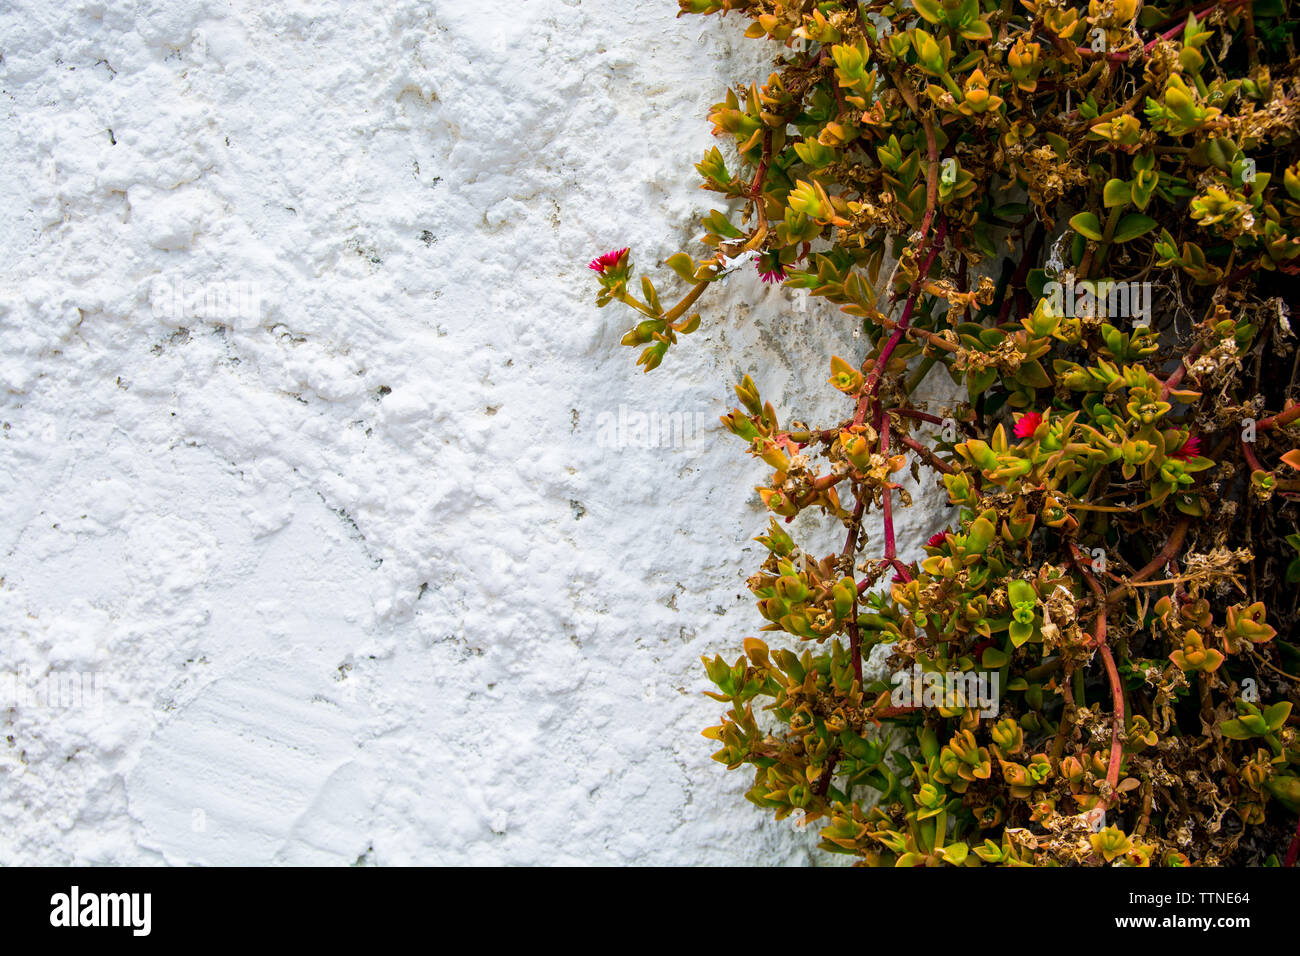 Climbing plant on a rough white wall. Stock Photo